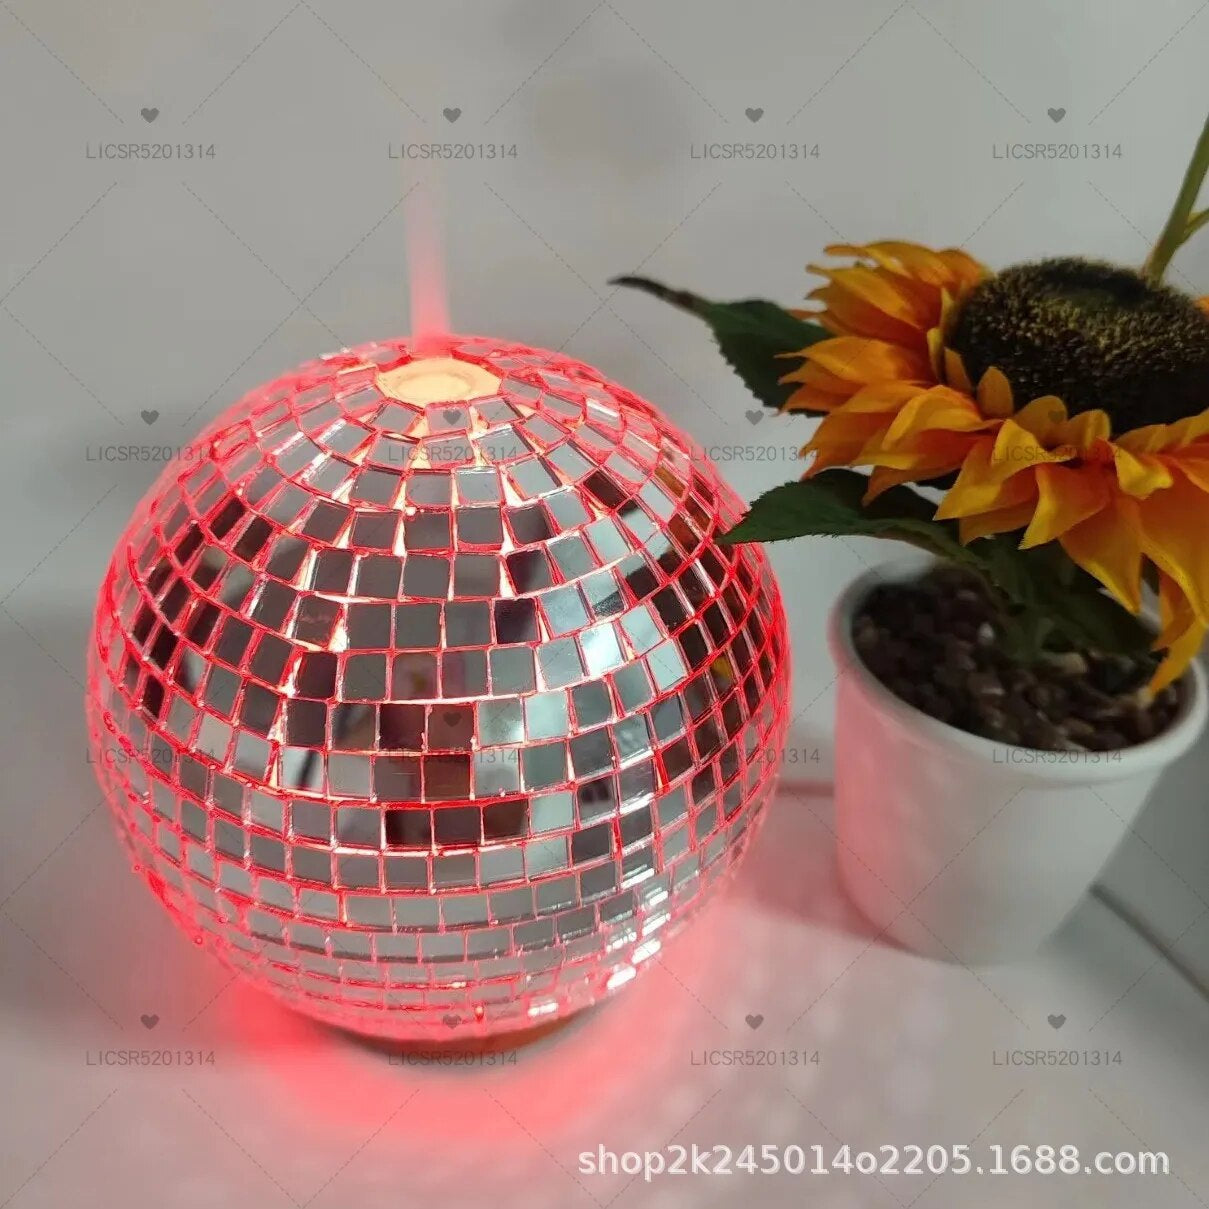 Aromadisco™ LuminaSphere